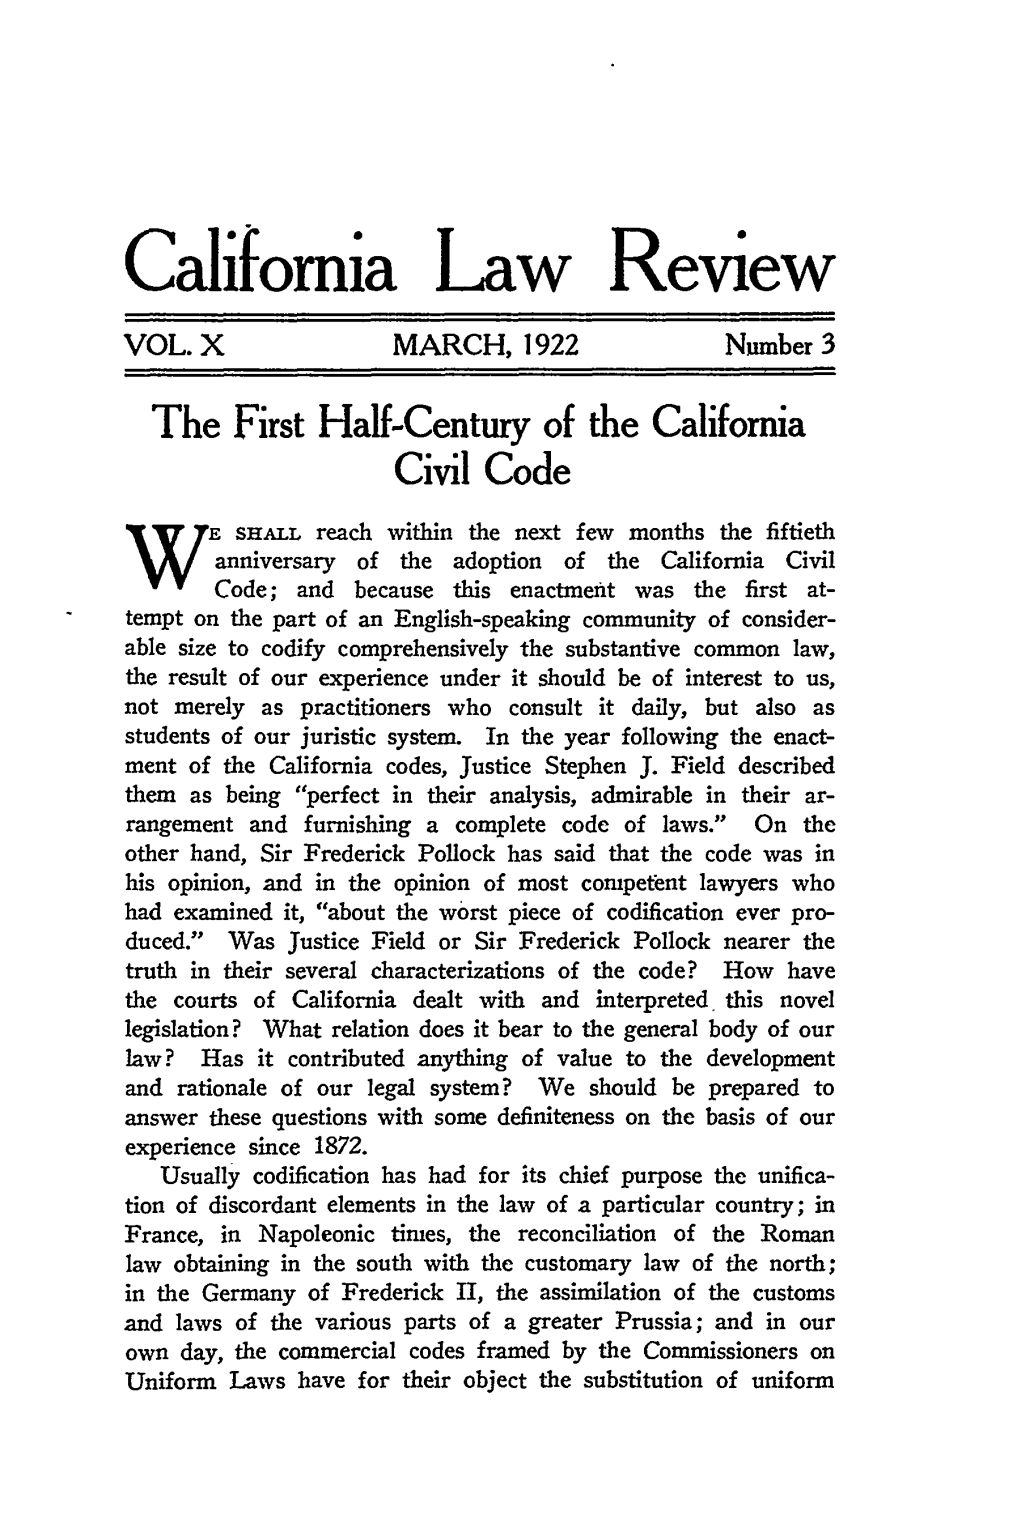 First Half-Century of the California Civil Code